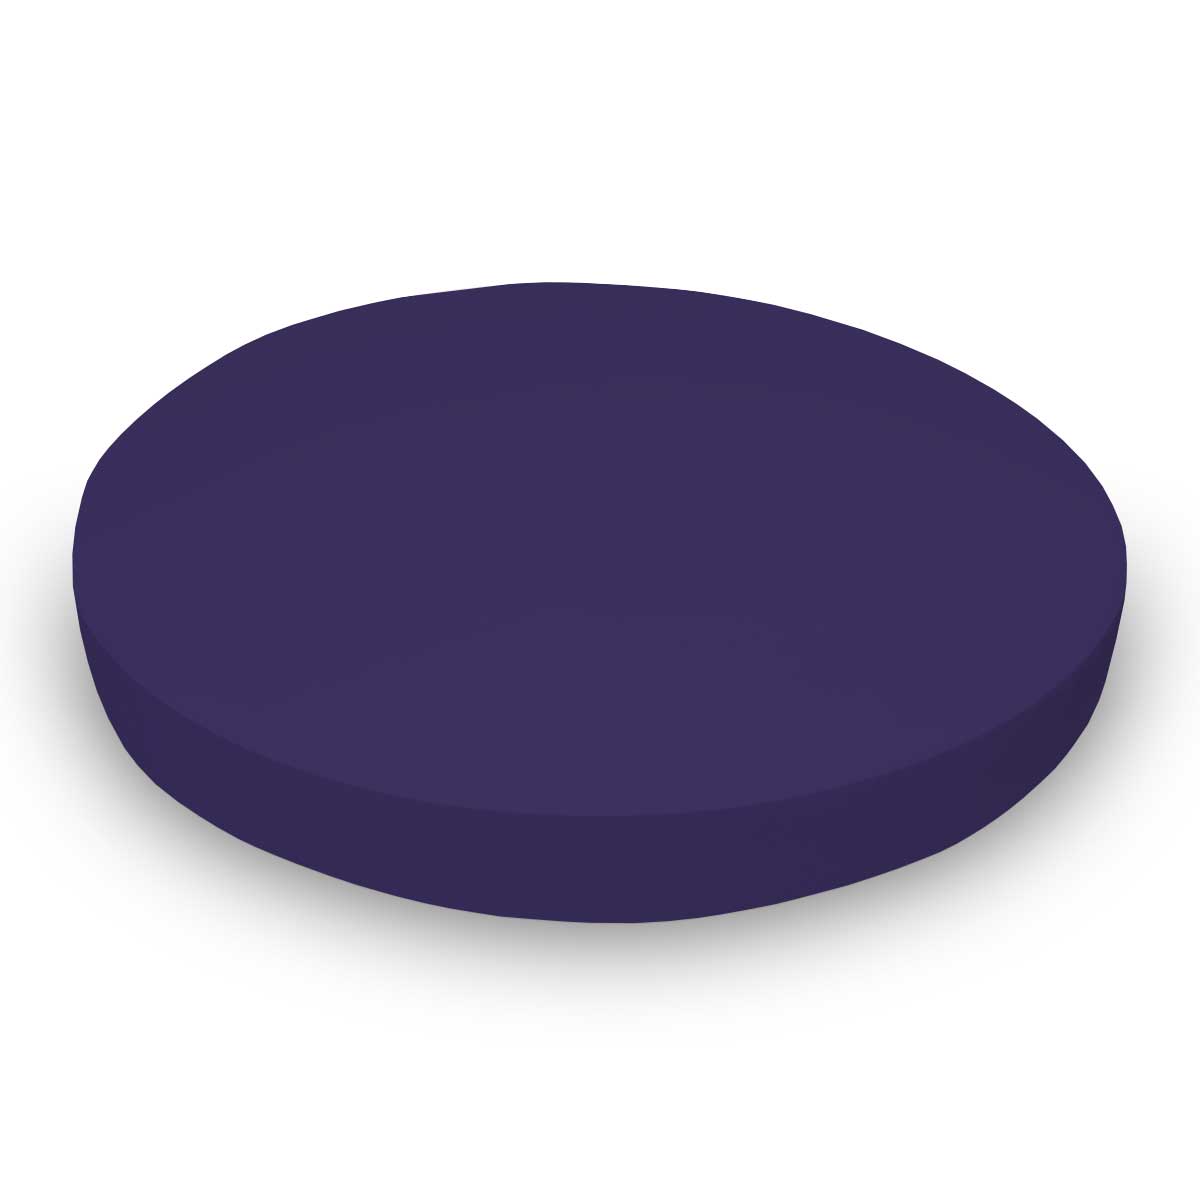 Oval Crib (Stokke Sleepi) - Purple Jersey Knit - Fitted  Oval